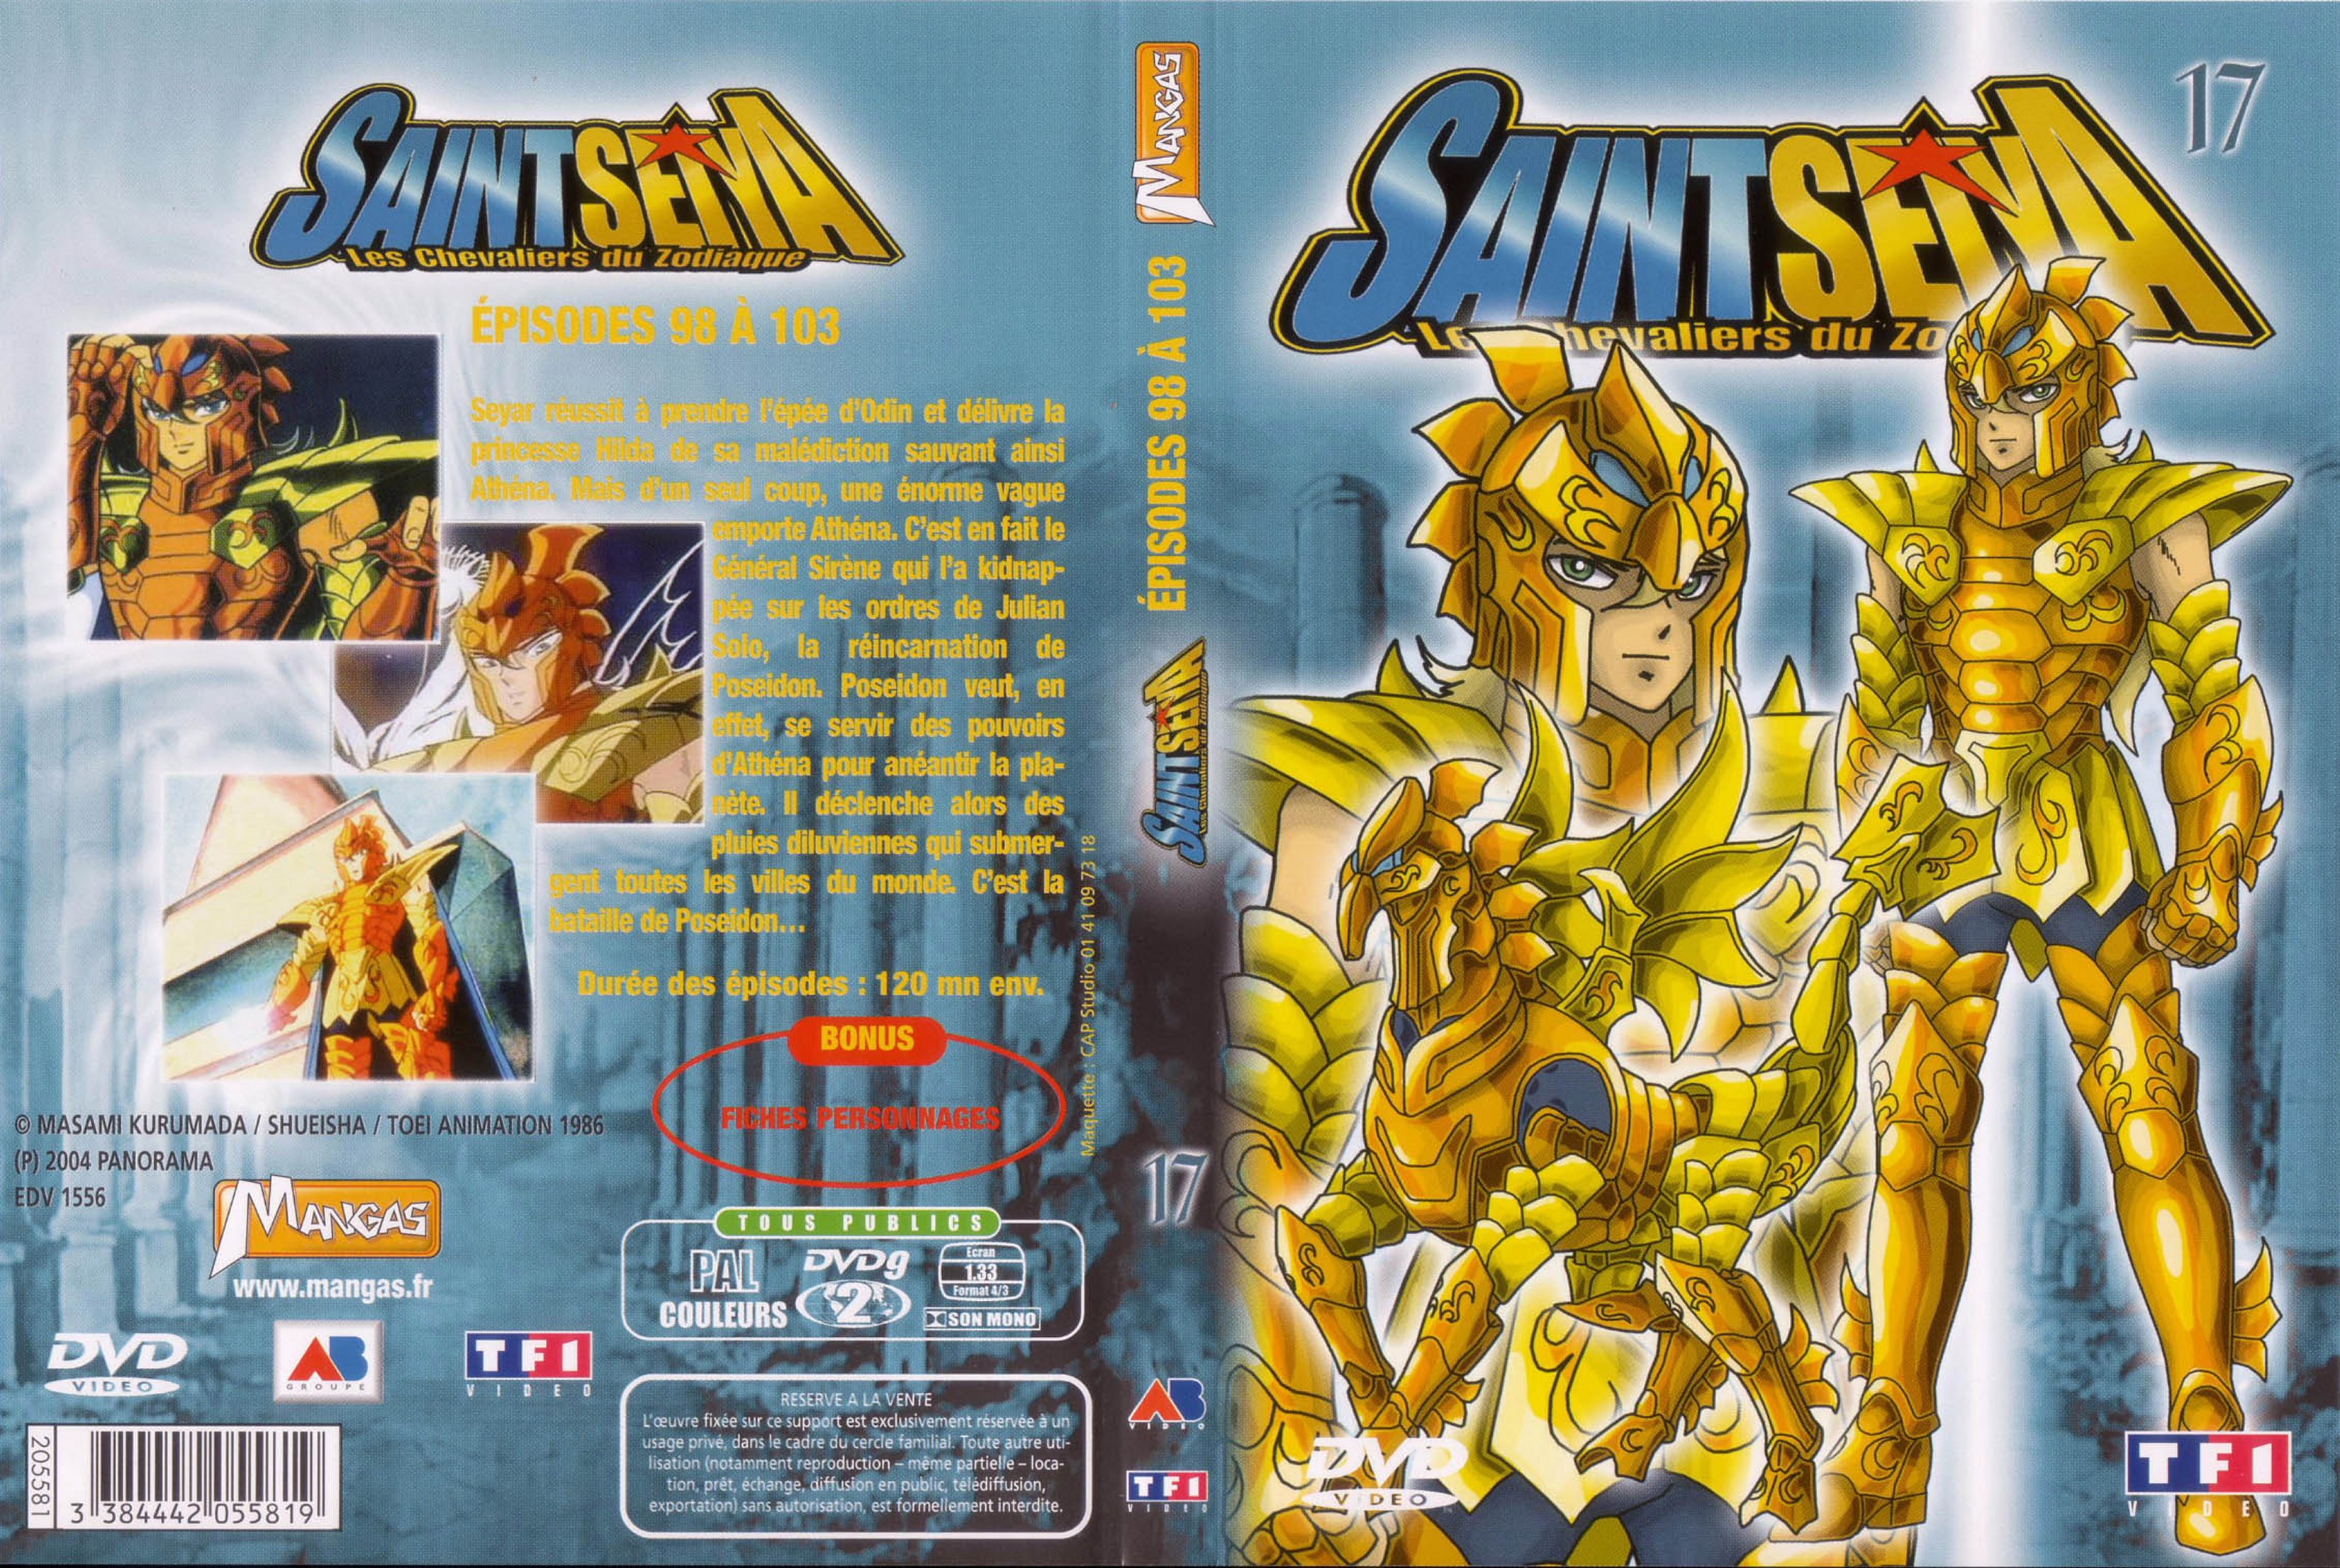 Jaquette DVD Saint Seiya vol 17